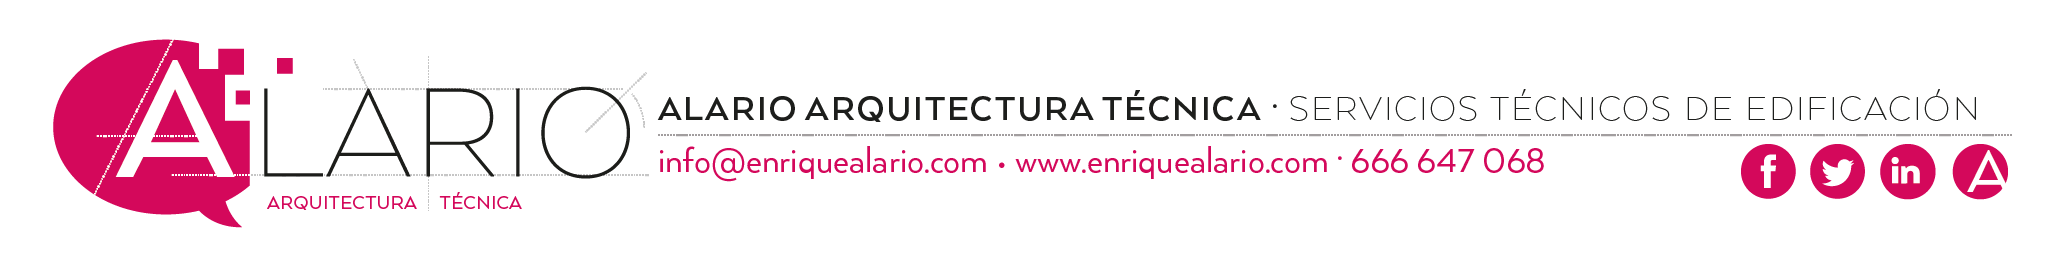 Servicios de arquitecto técnico en Valencia